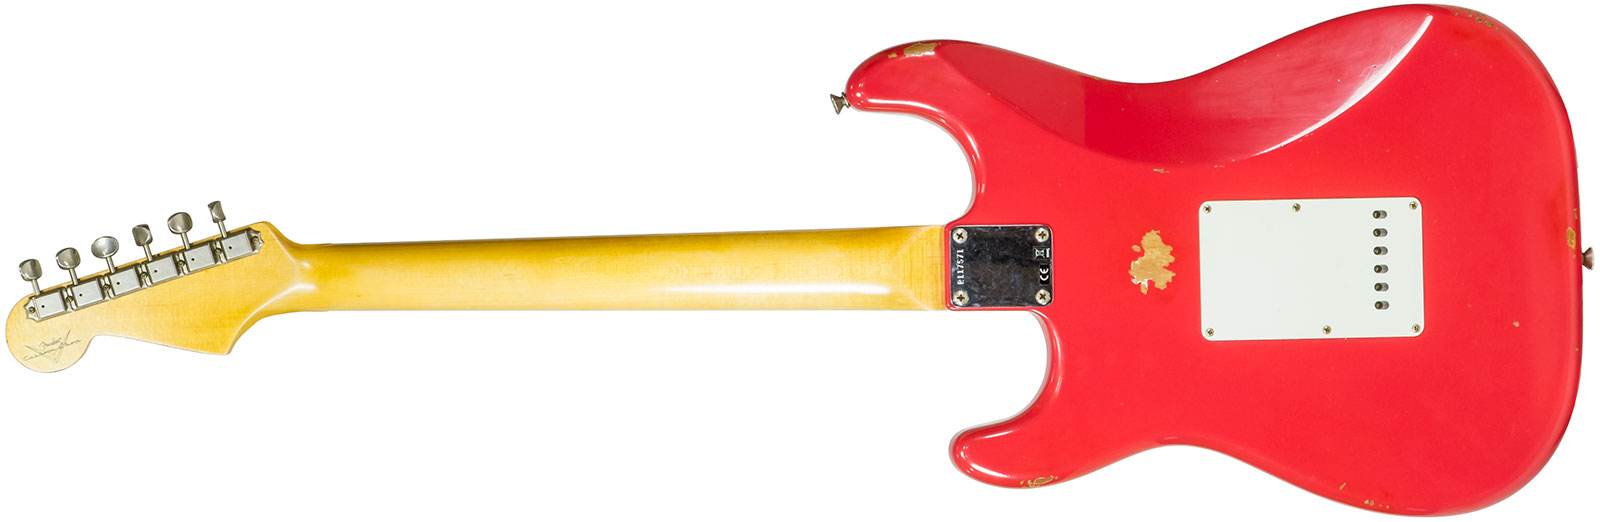 Fender Custom Shop Strat 1963 3s Trem Rw #r117571 - Relic Fiesta Red - E-Gitarre in Str-Form - Variation 1